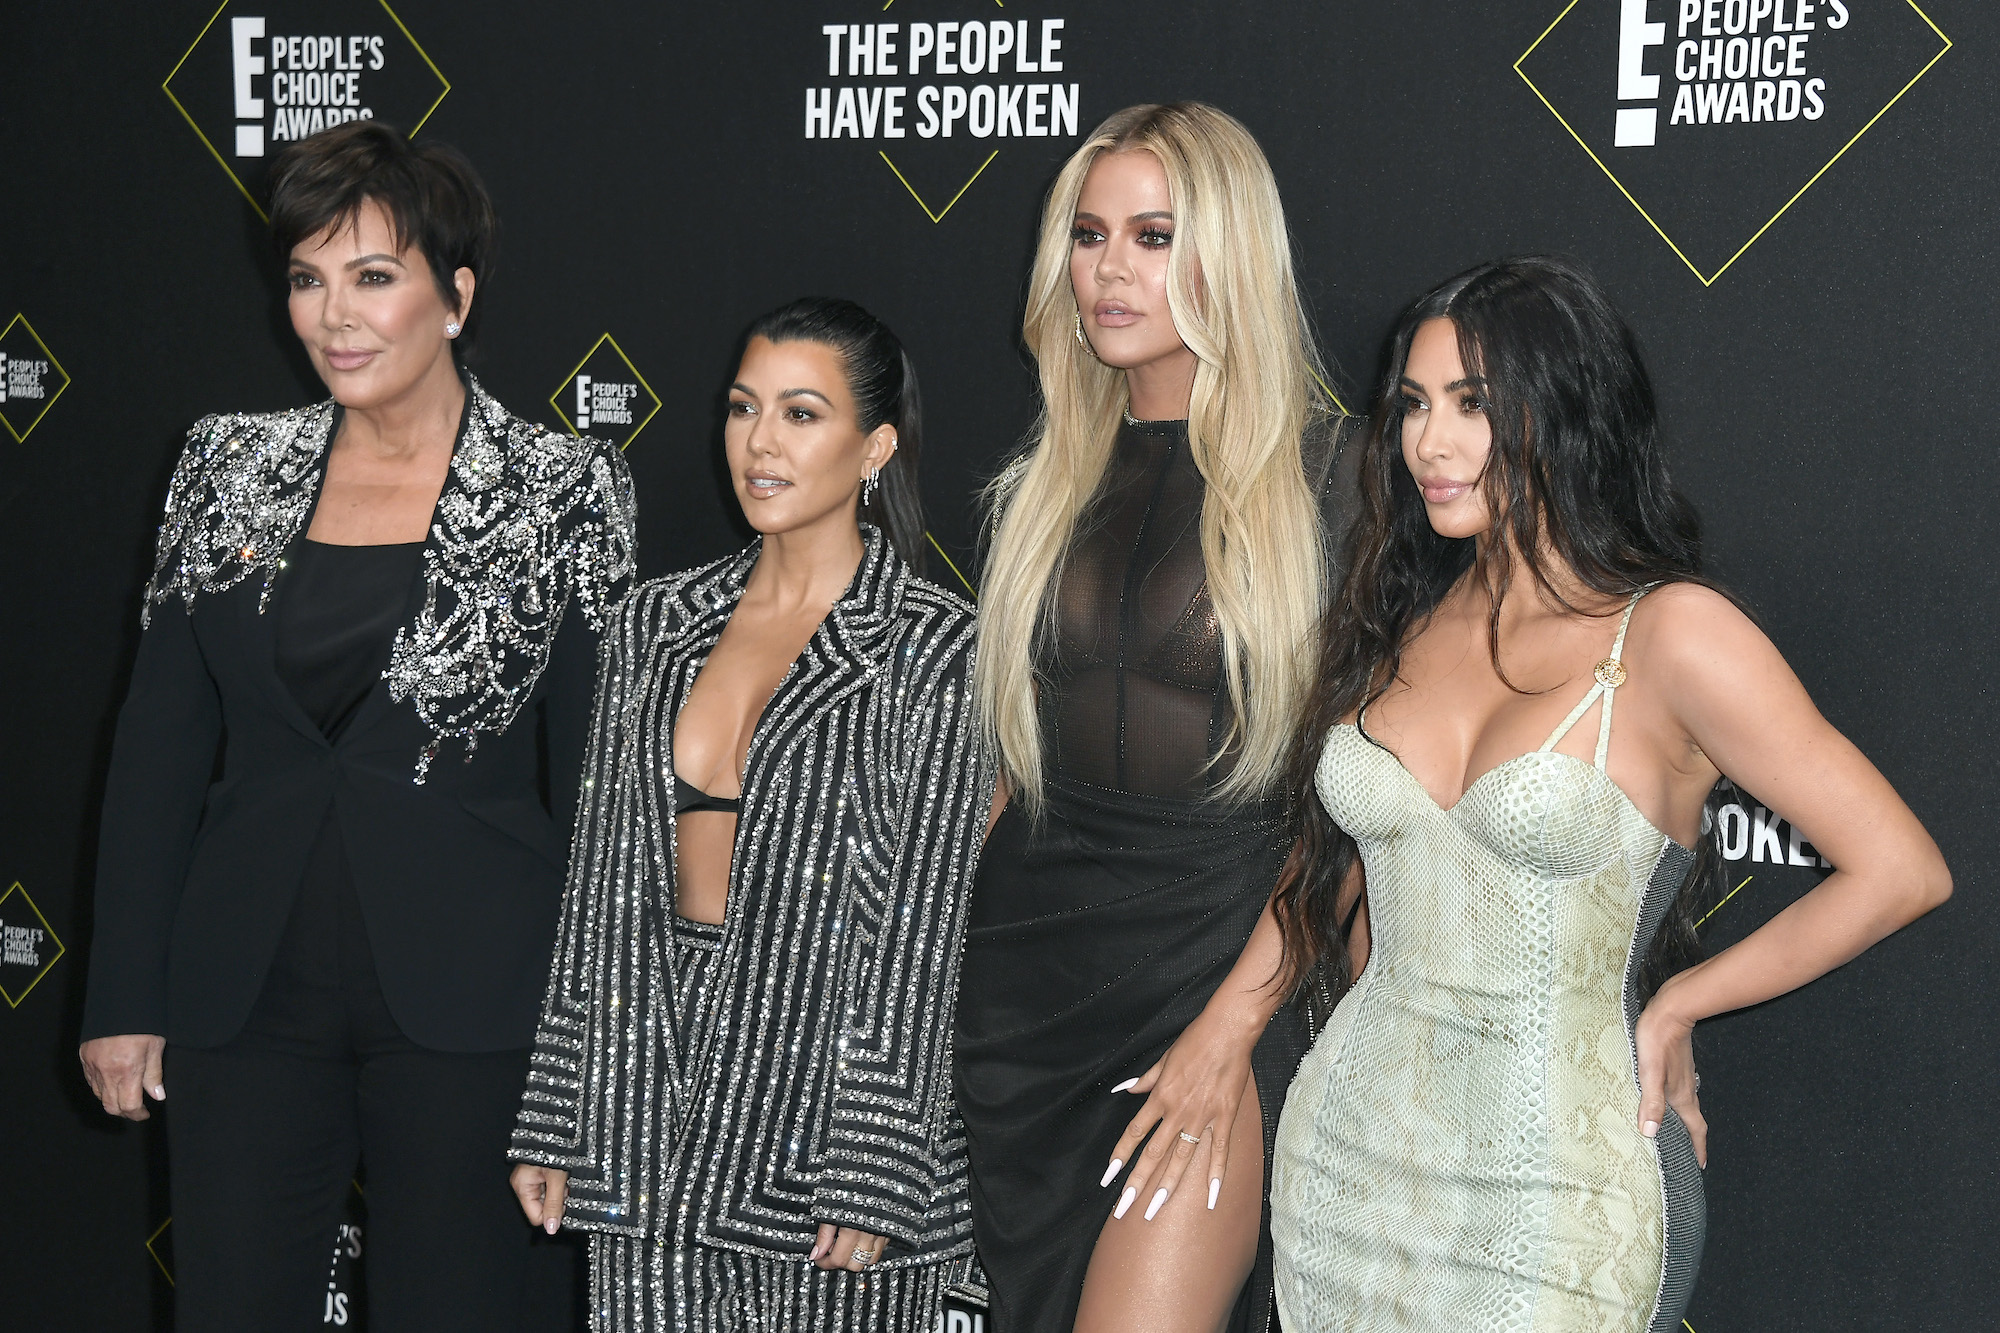 Kris Jenner, Kourtney Kardashian, Khloé Kardashian, and Kim Kardashian West